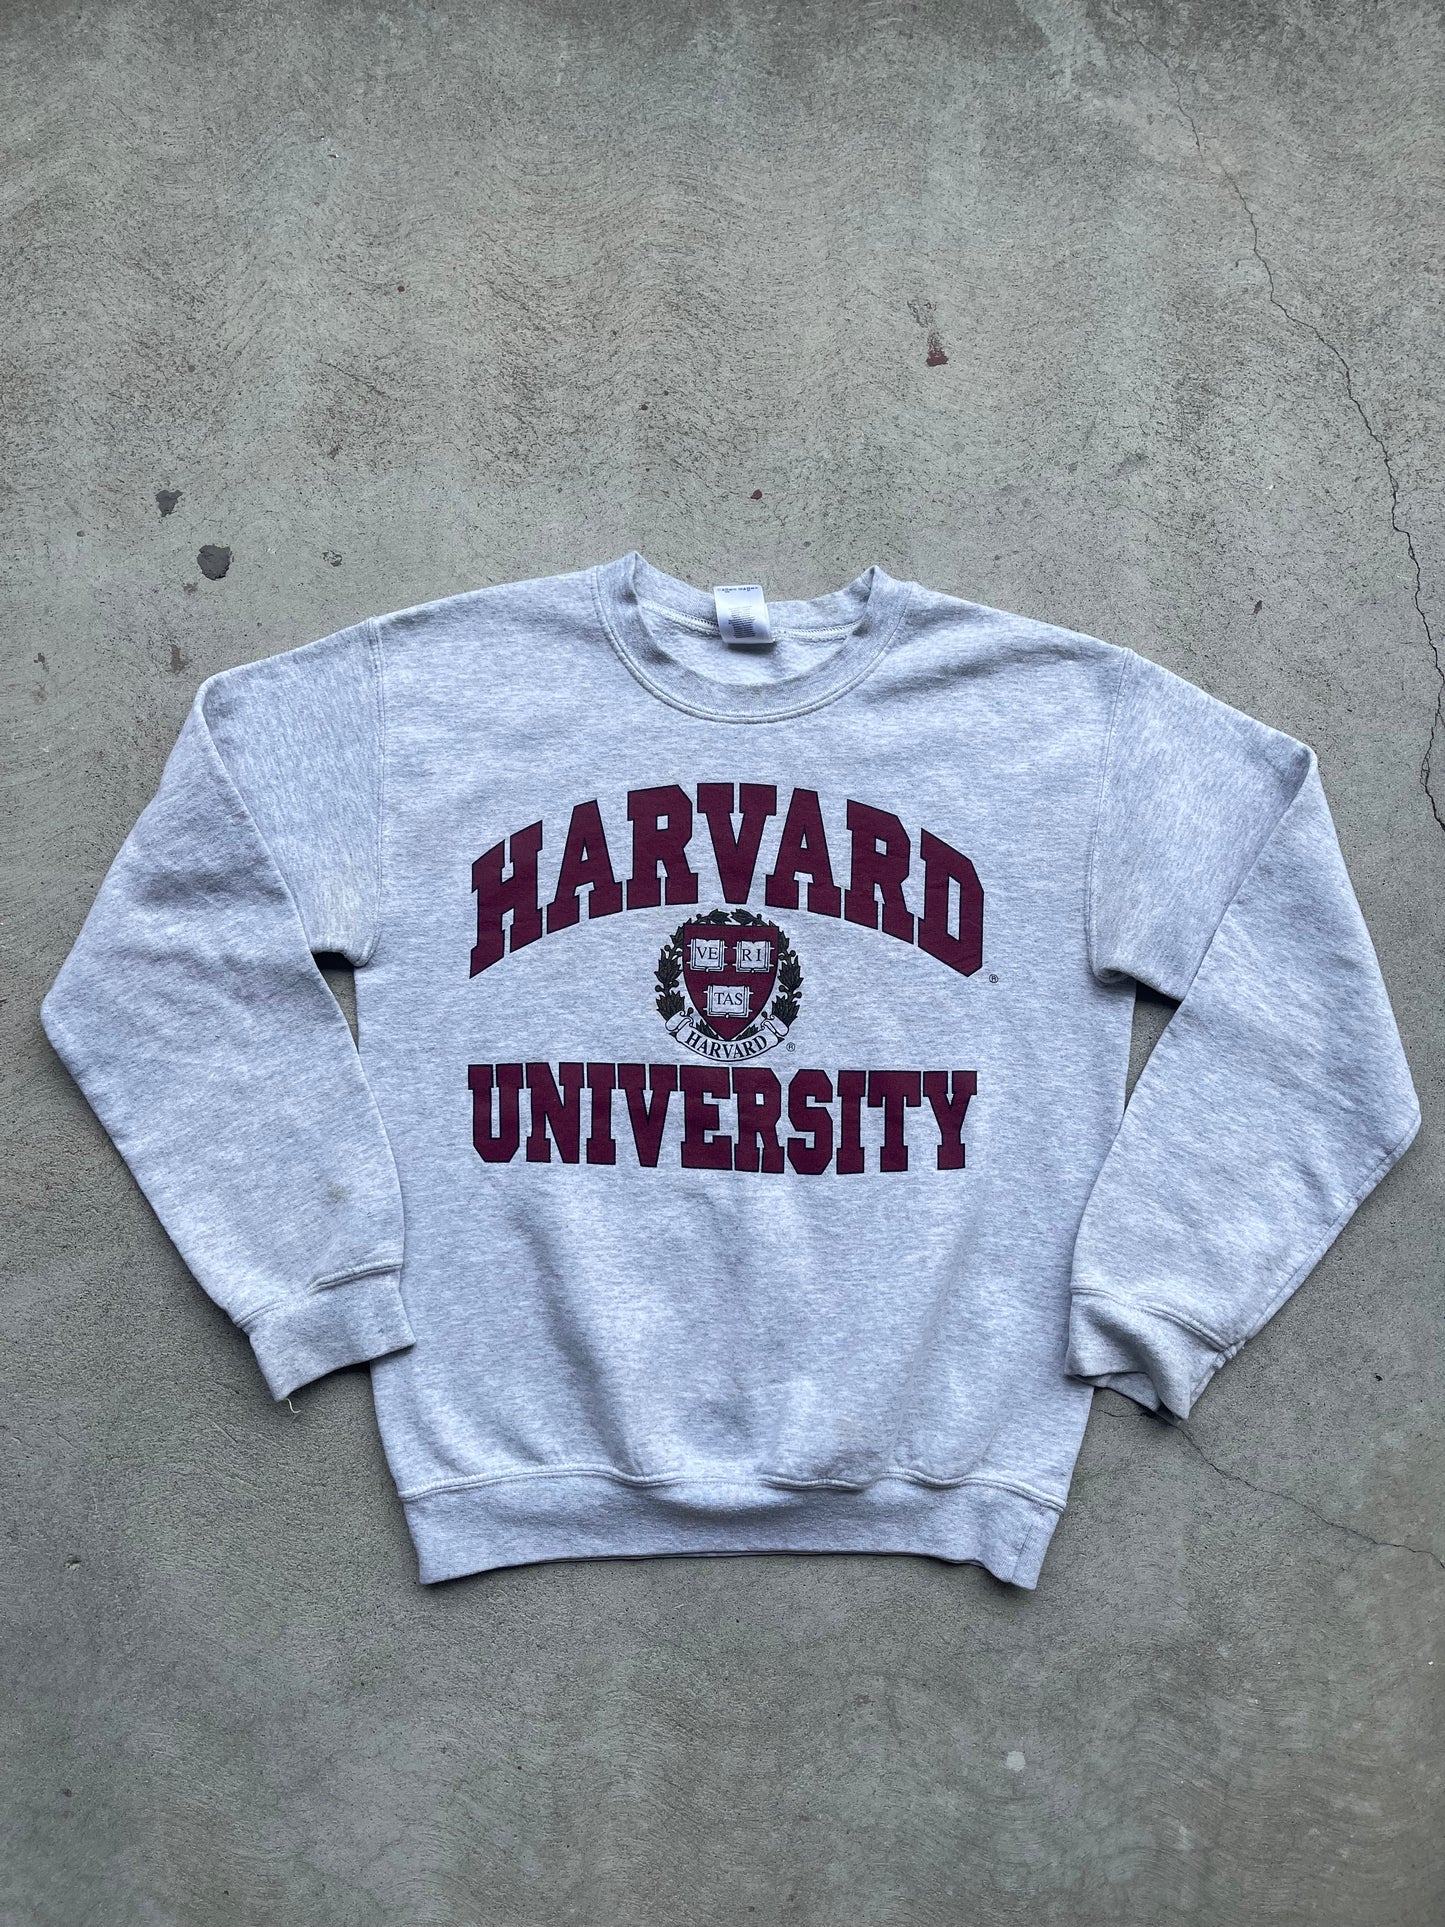 Pre-loved Harvard Crewneck Sweatshirt - S/M